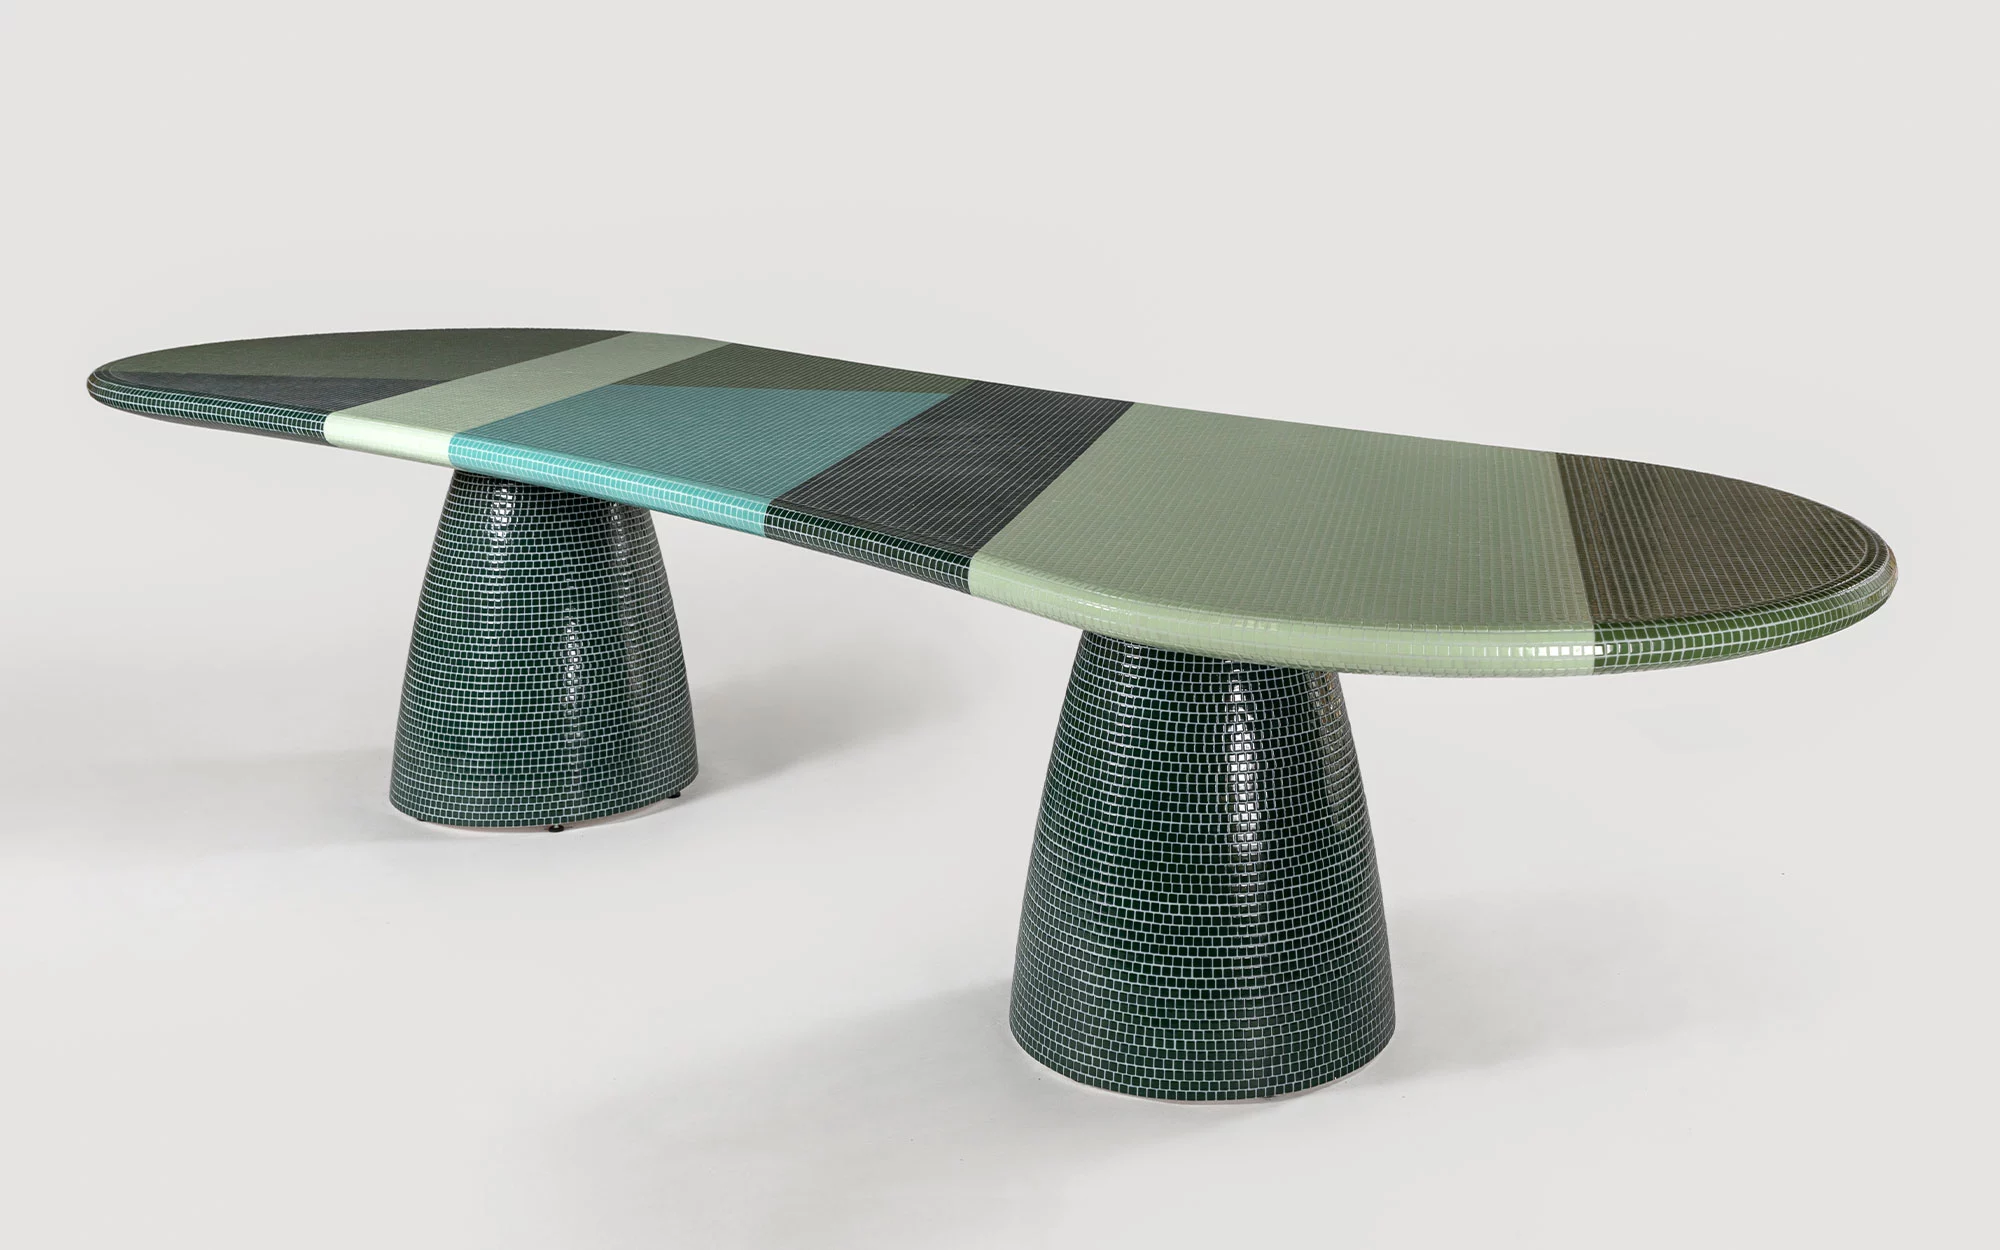 Umbria Dining Table - Alessandro Mendini - Coffee table - Galerie kreo